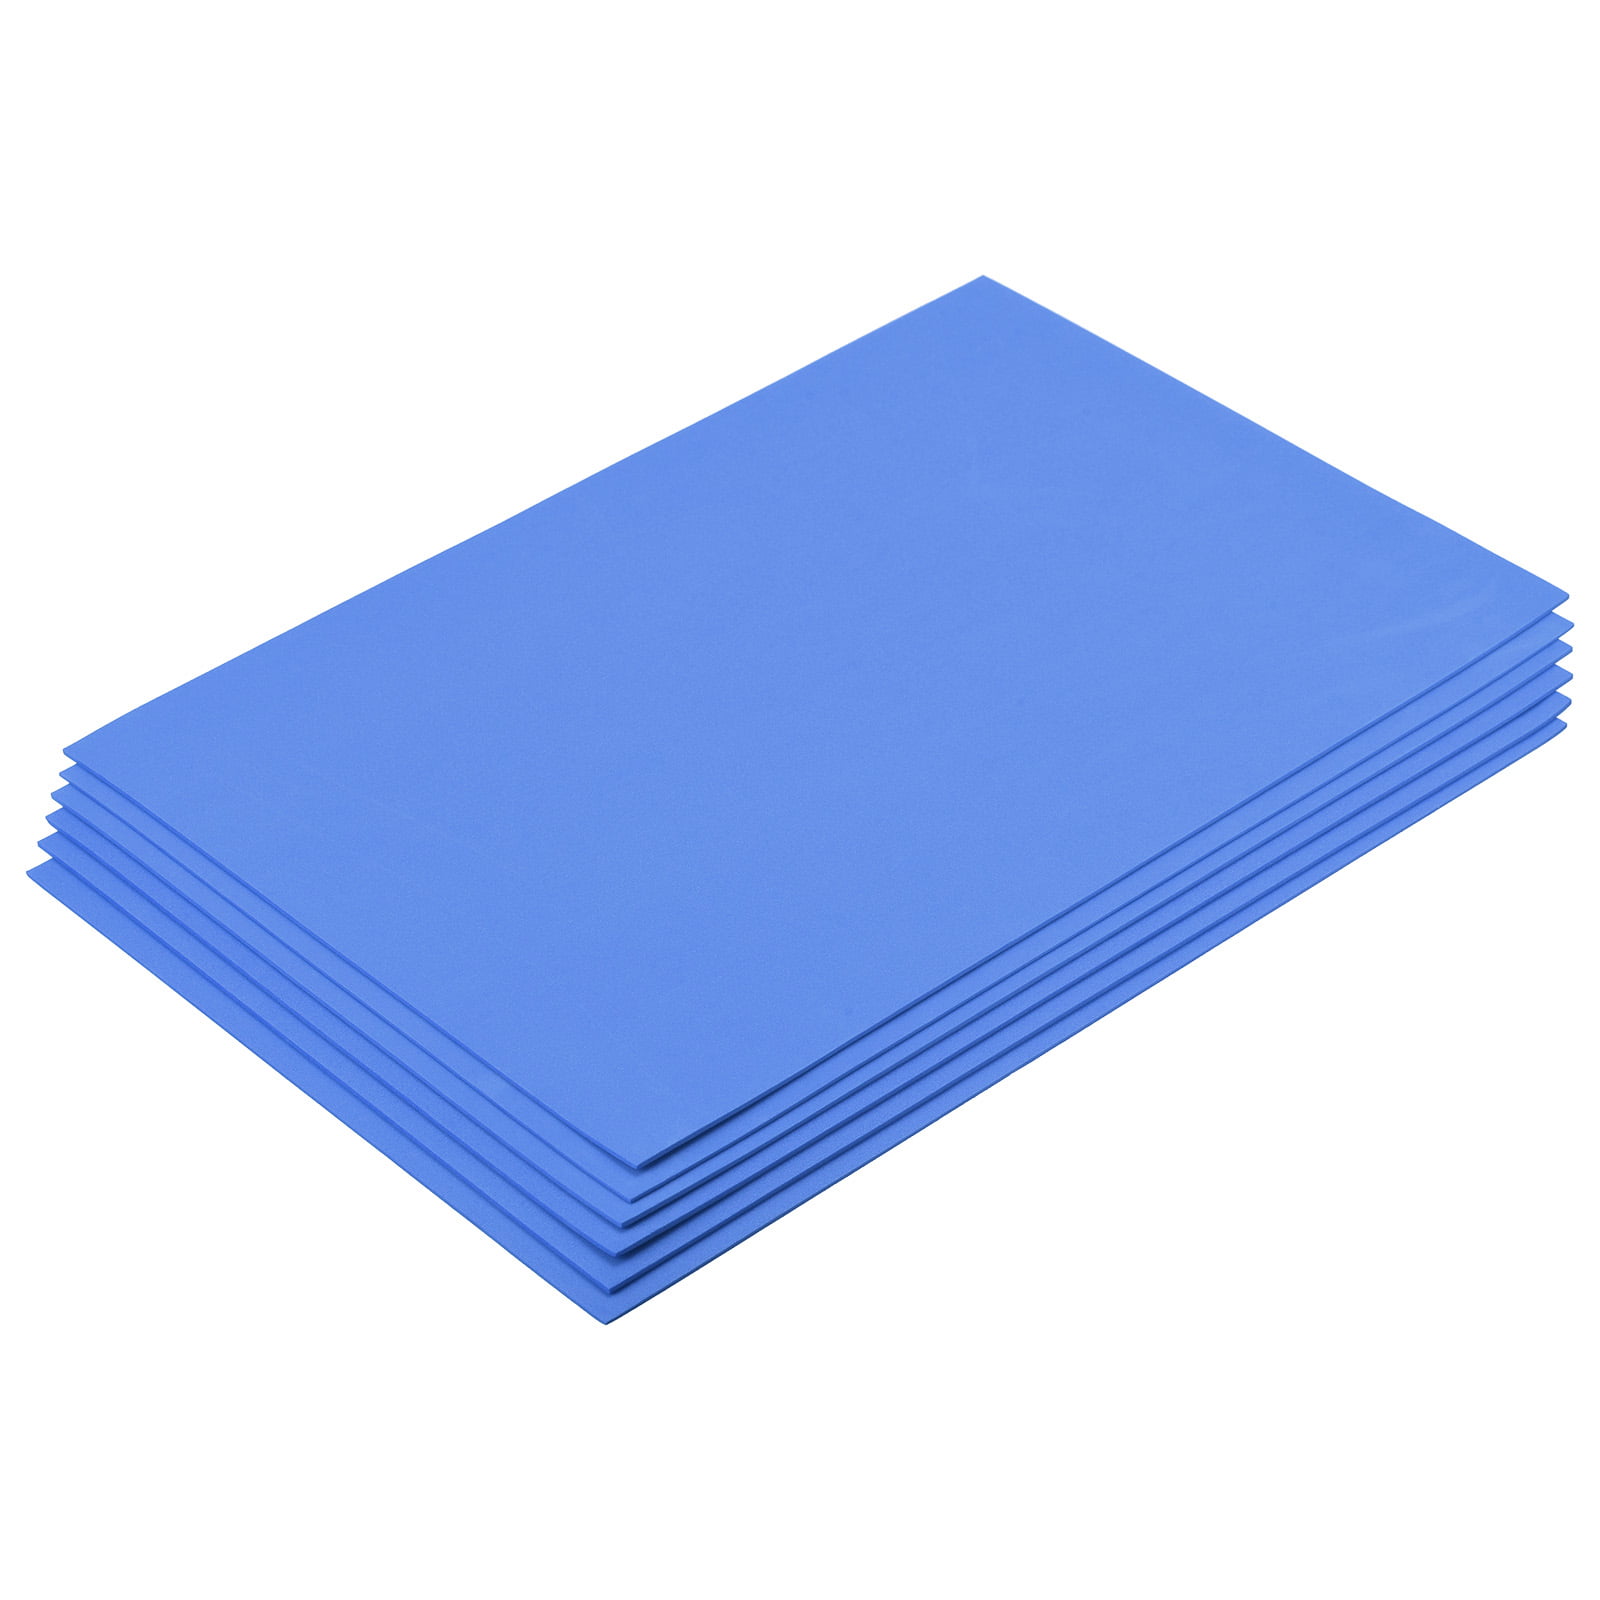 20 PCS EVA Foam Sheets DIY Handcraft Materials 1mm Thick 15.7 x 11.8 Inches  Blue EVA Foam Papers for Arts and Crafts